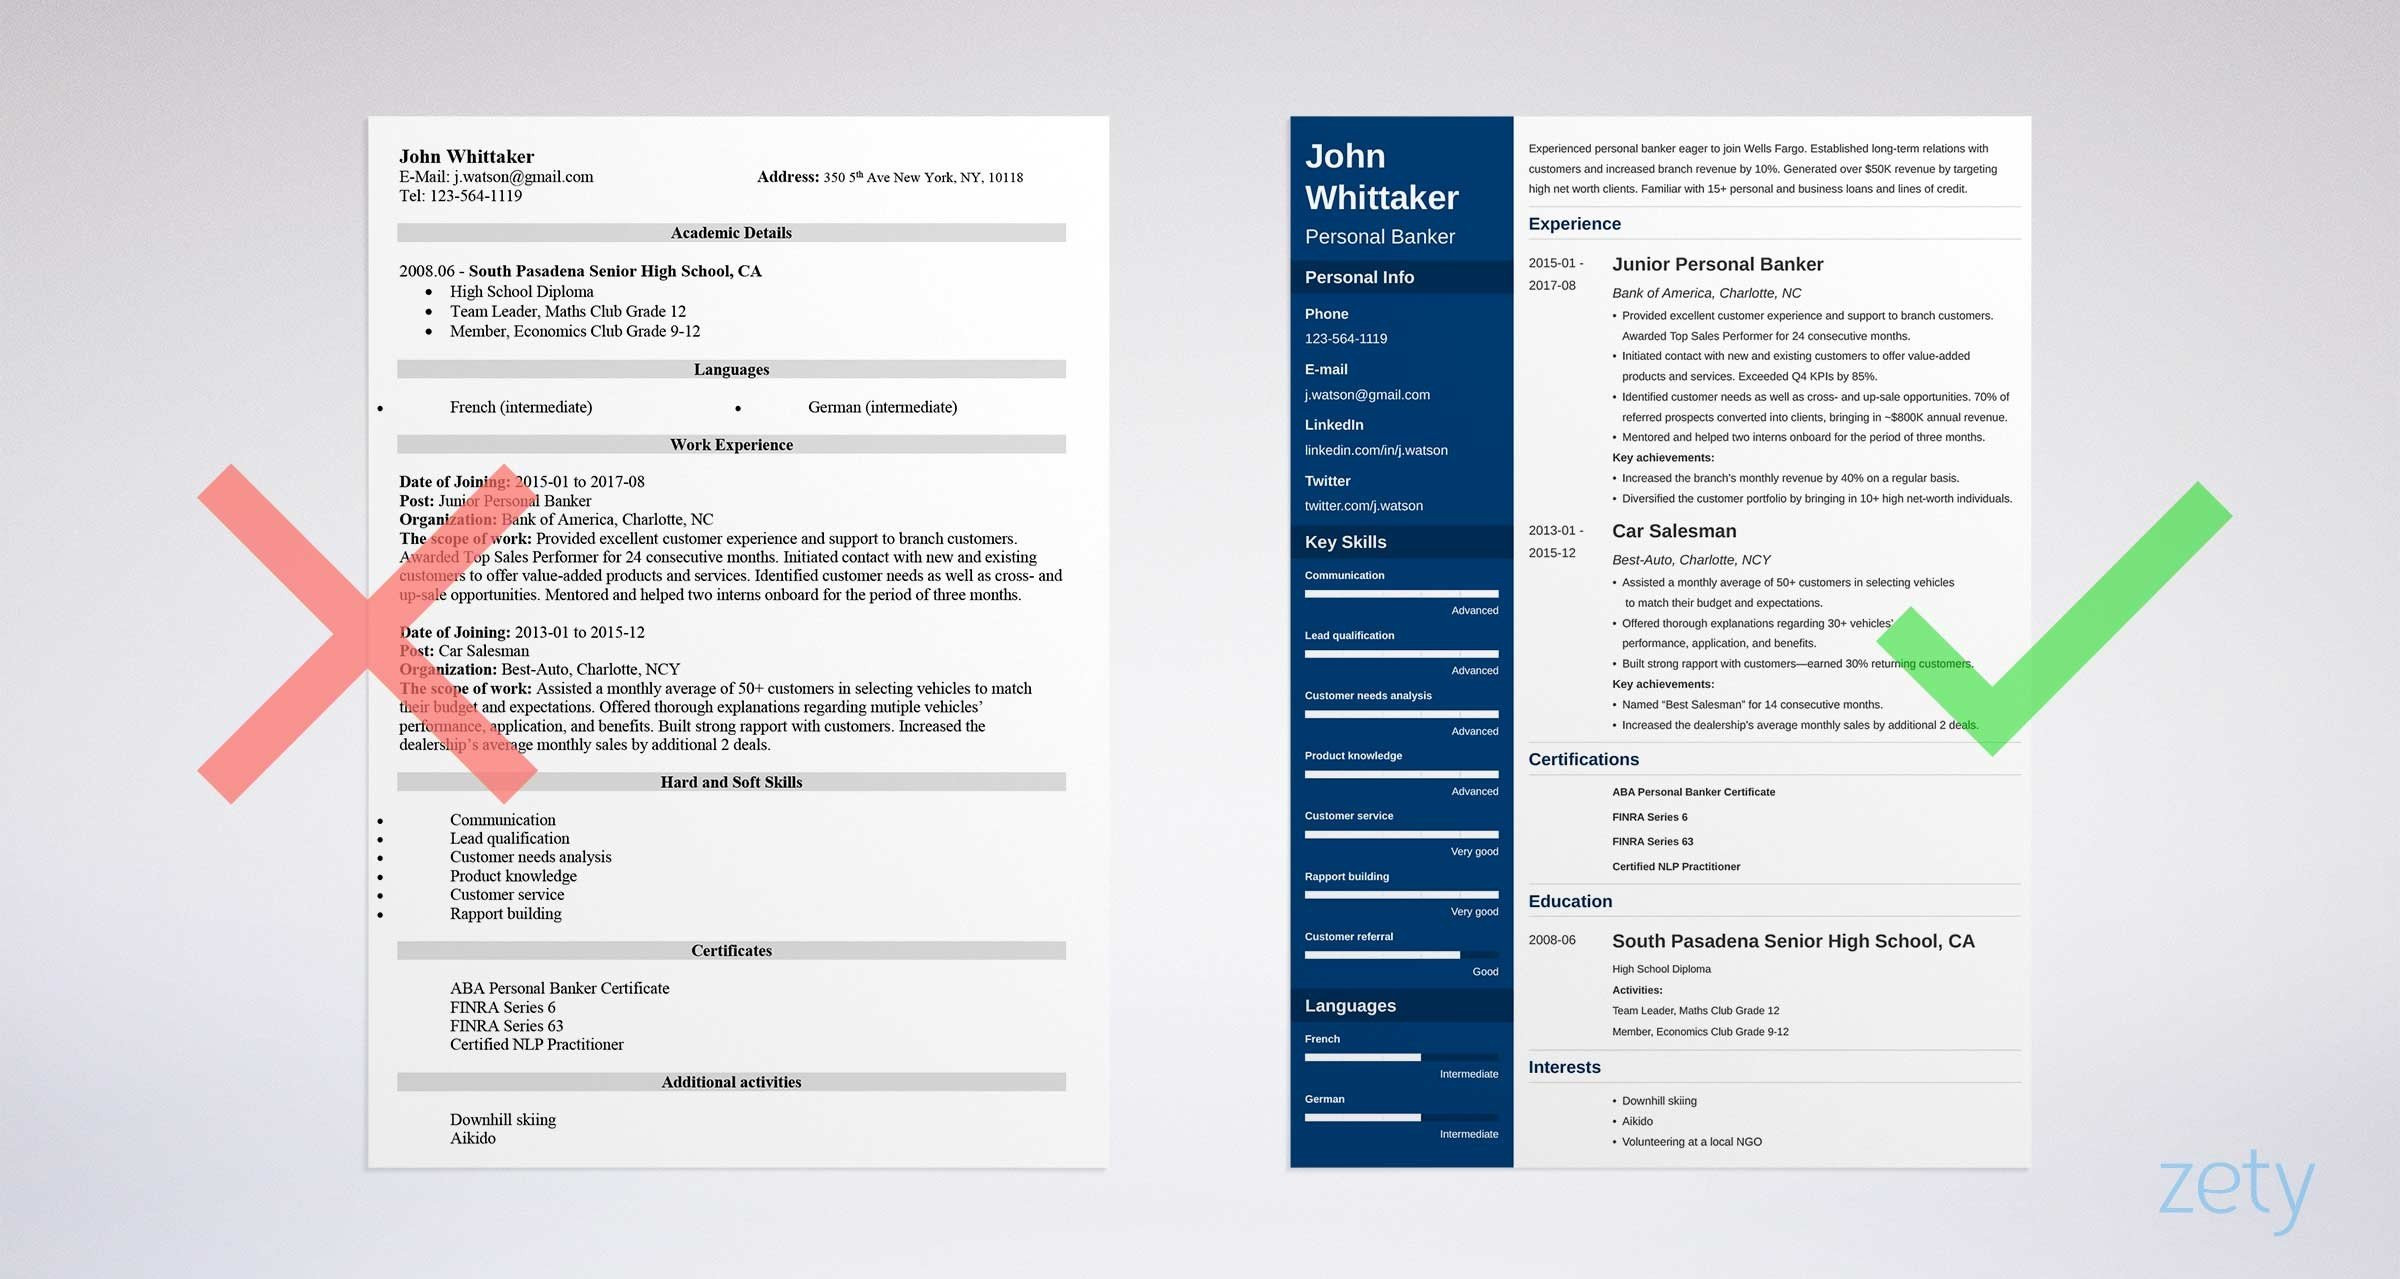 Sample Resume for Personal Banker Position Personal Banker Resume: Examples, Skills & Job Description